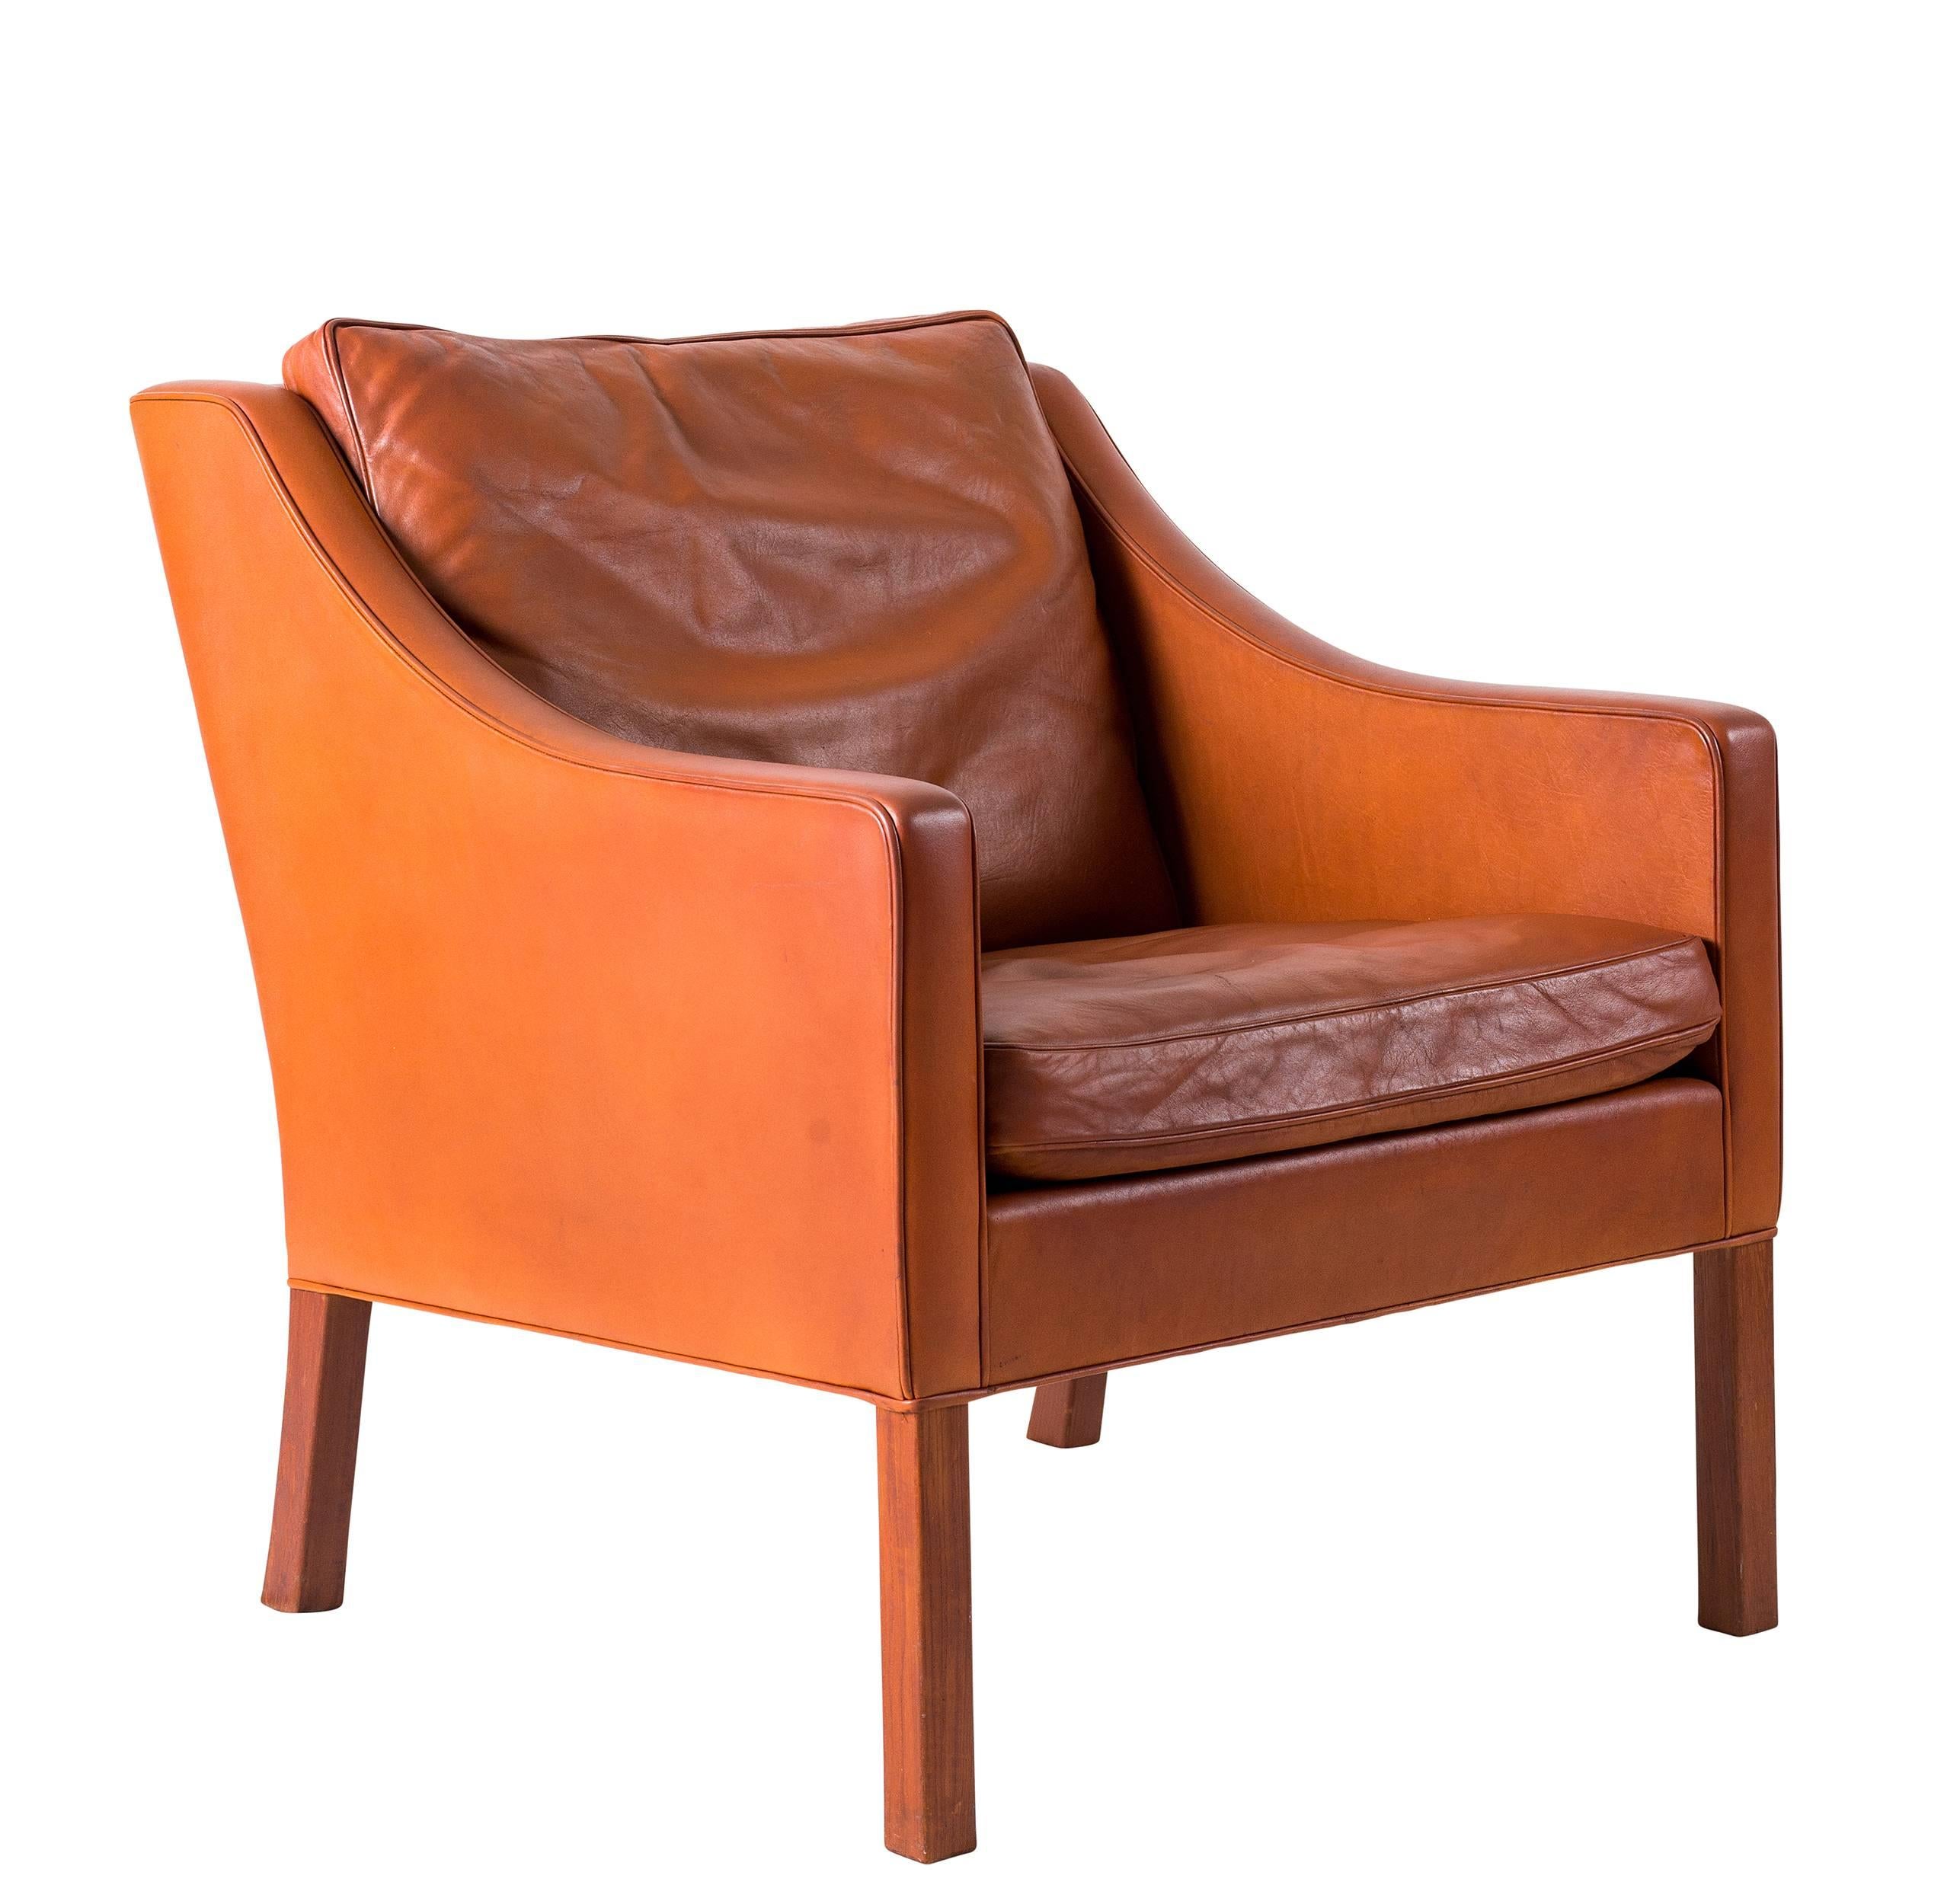 Børge Mogensen model #2207 leather lounge chair.